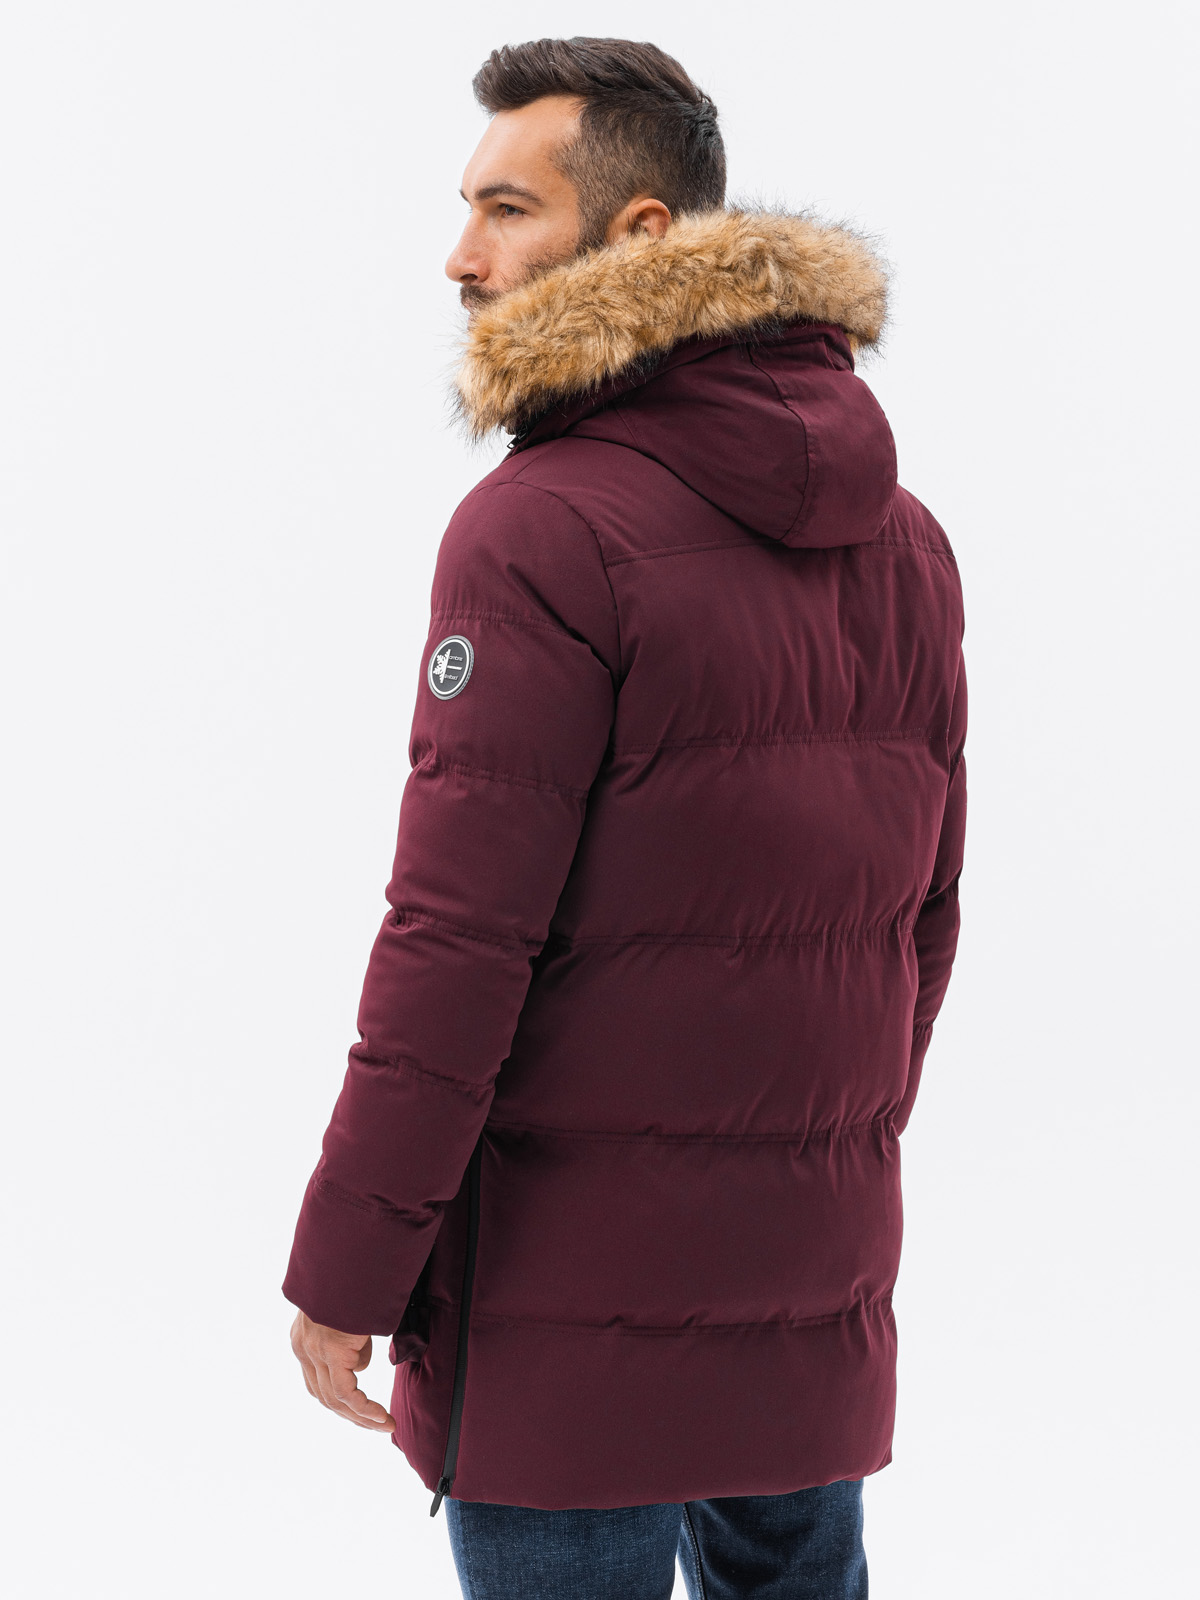 Men's winter jacket - dark red C554  MODONE wholesale - Clothing For Men